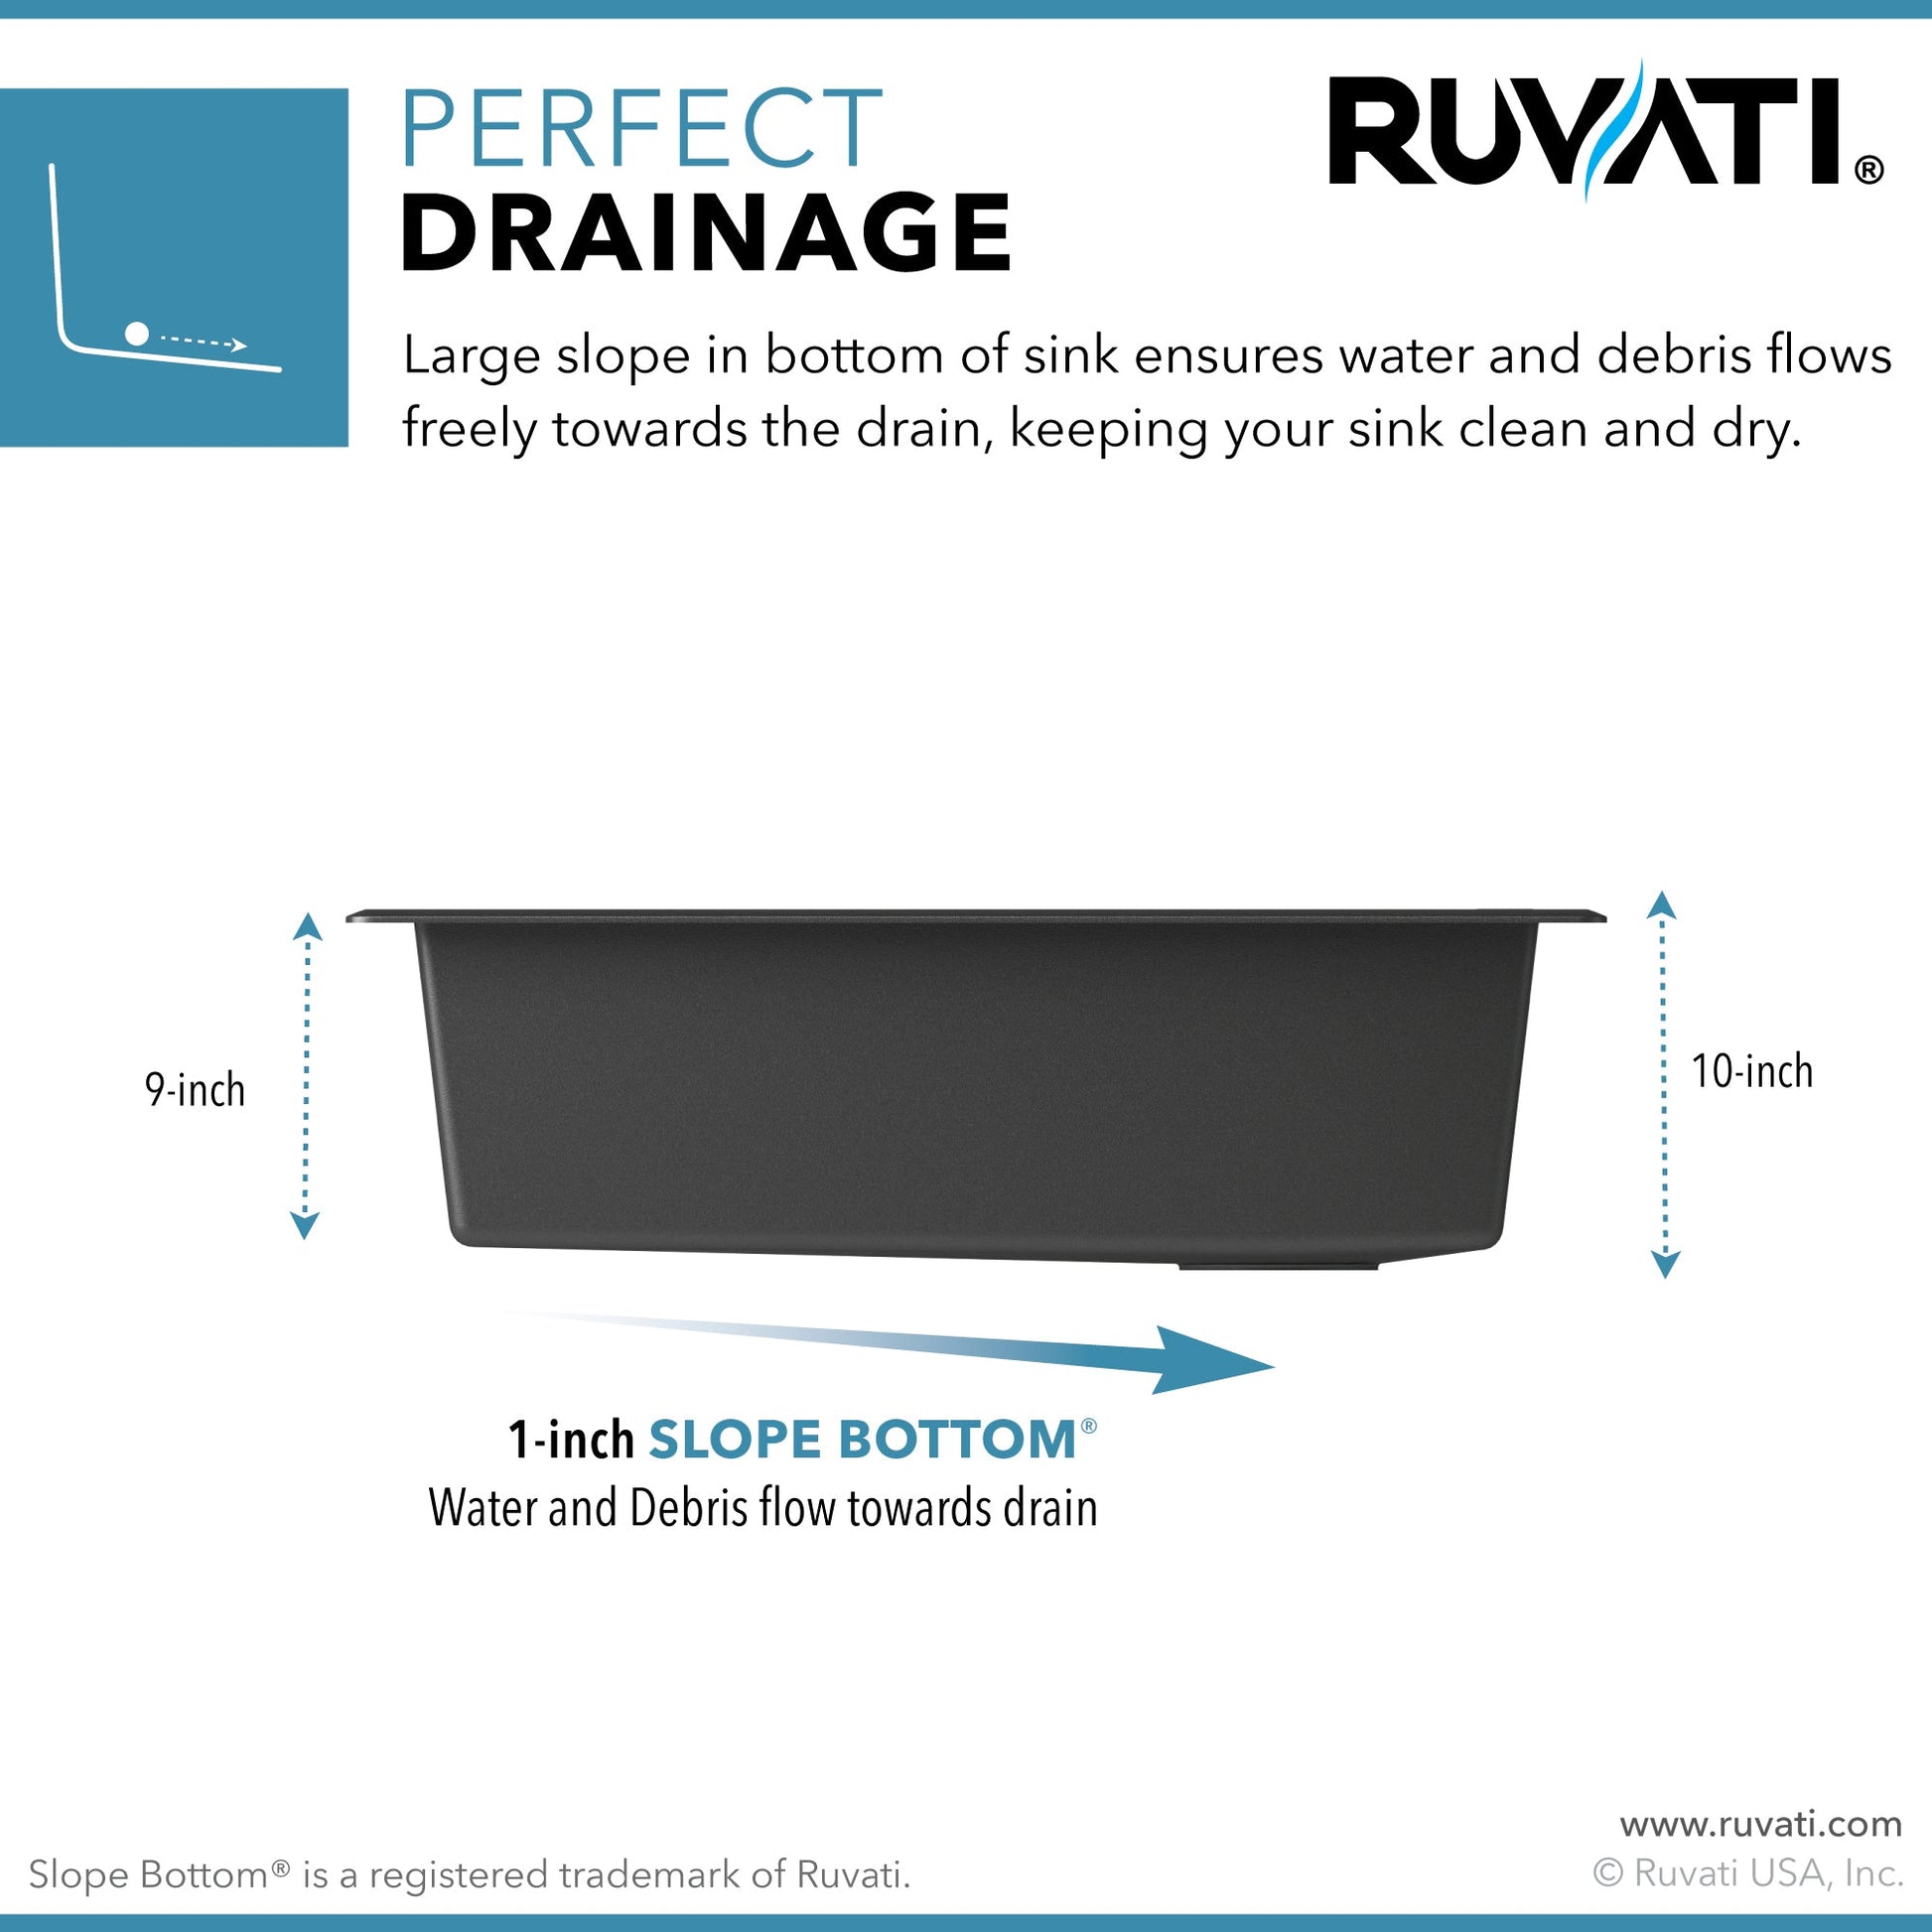 Ruvati epiGranite 33” x 22” Espresso Brown Drop-in Granite Composite Single Bowl Kitchen Sink With Basket Strainer and Drain Assembly